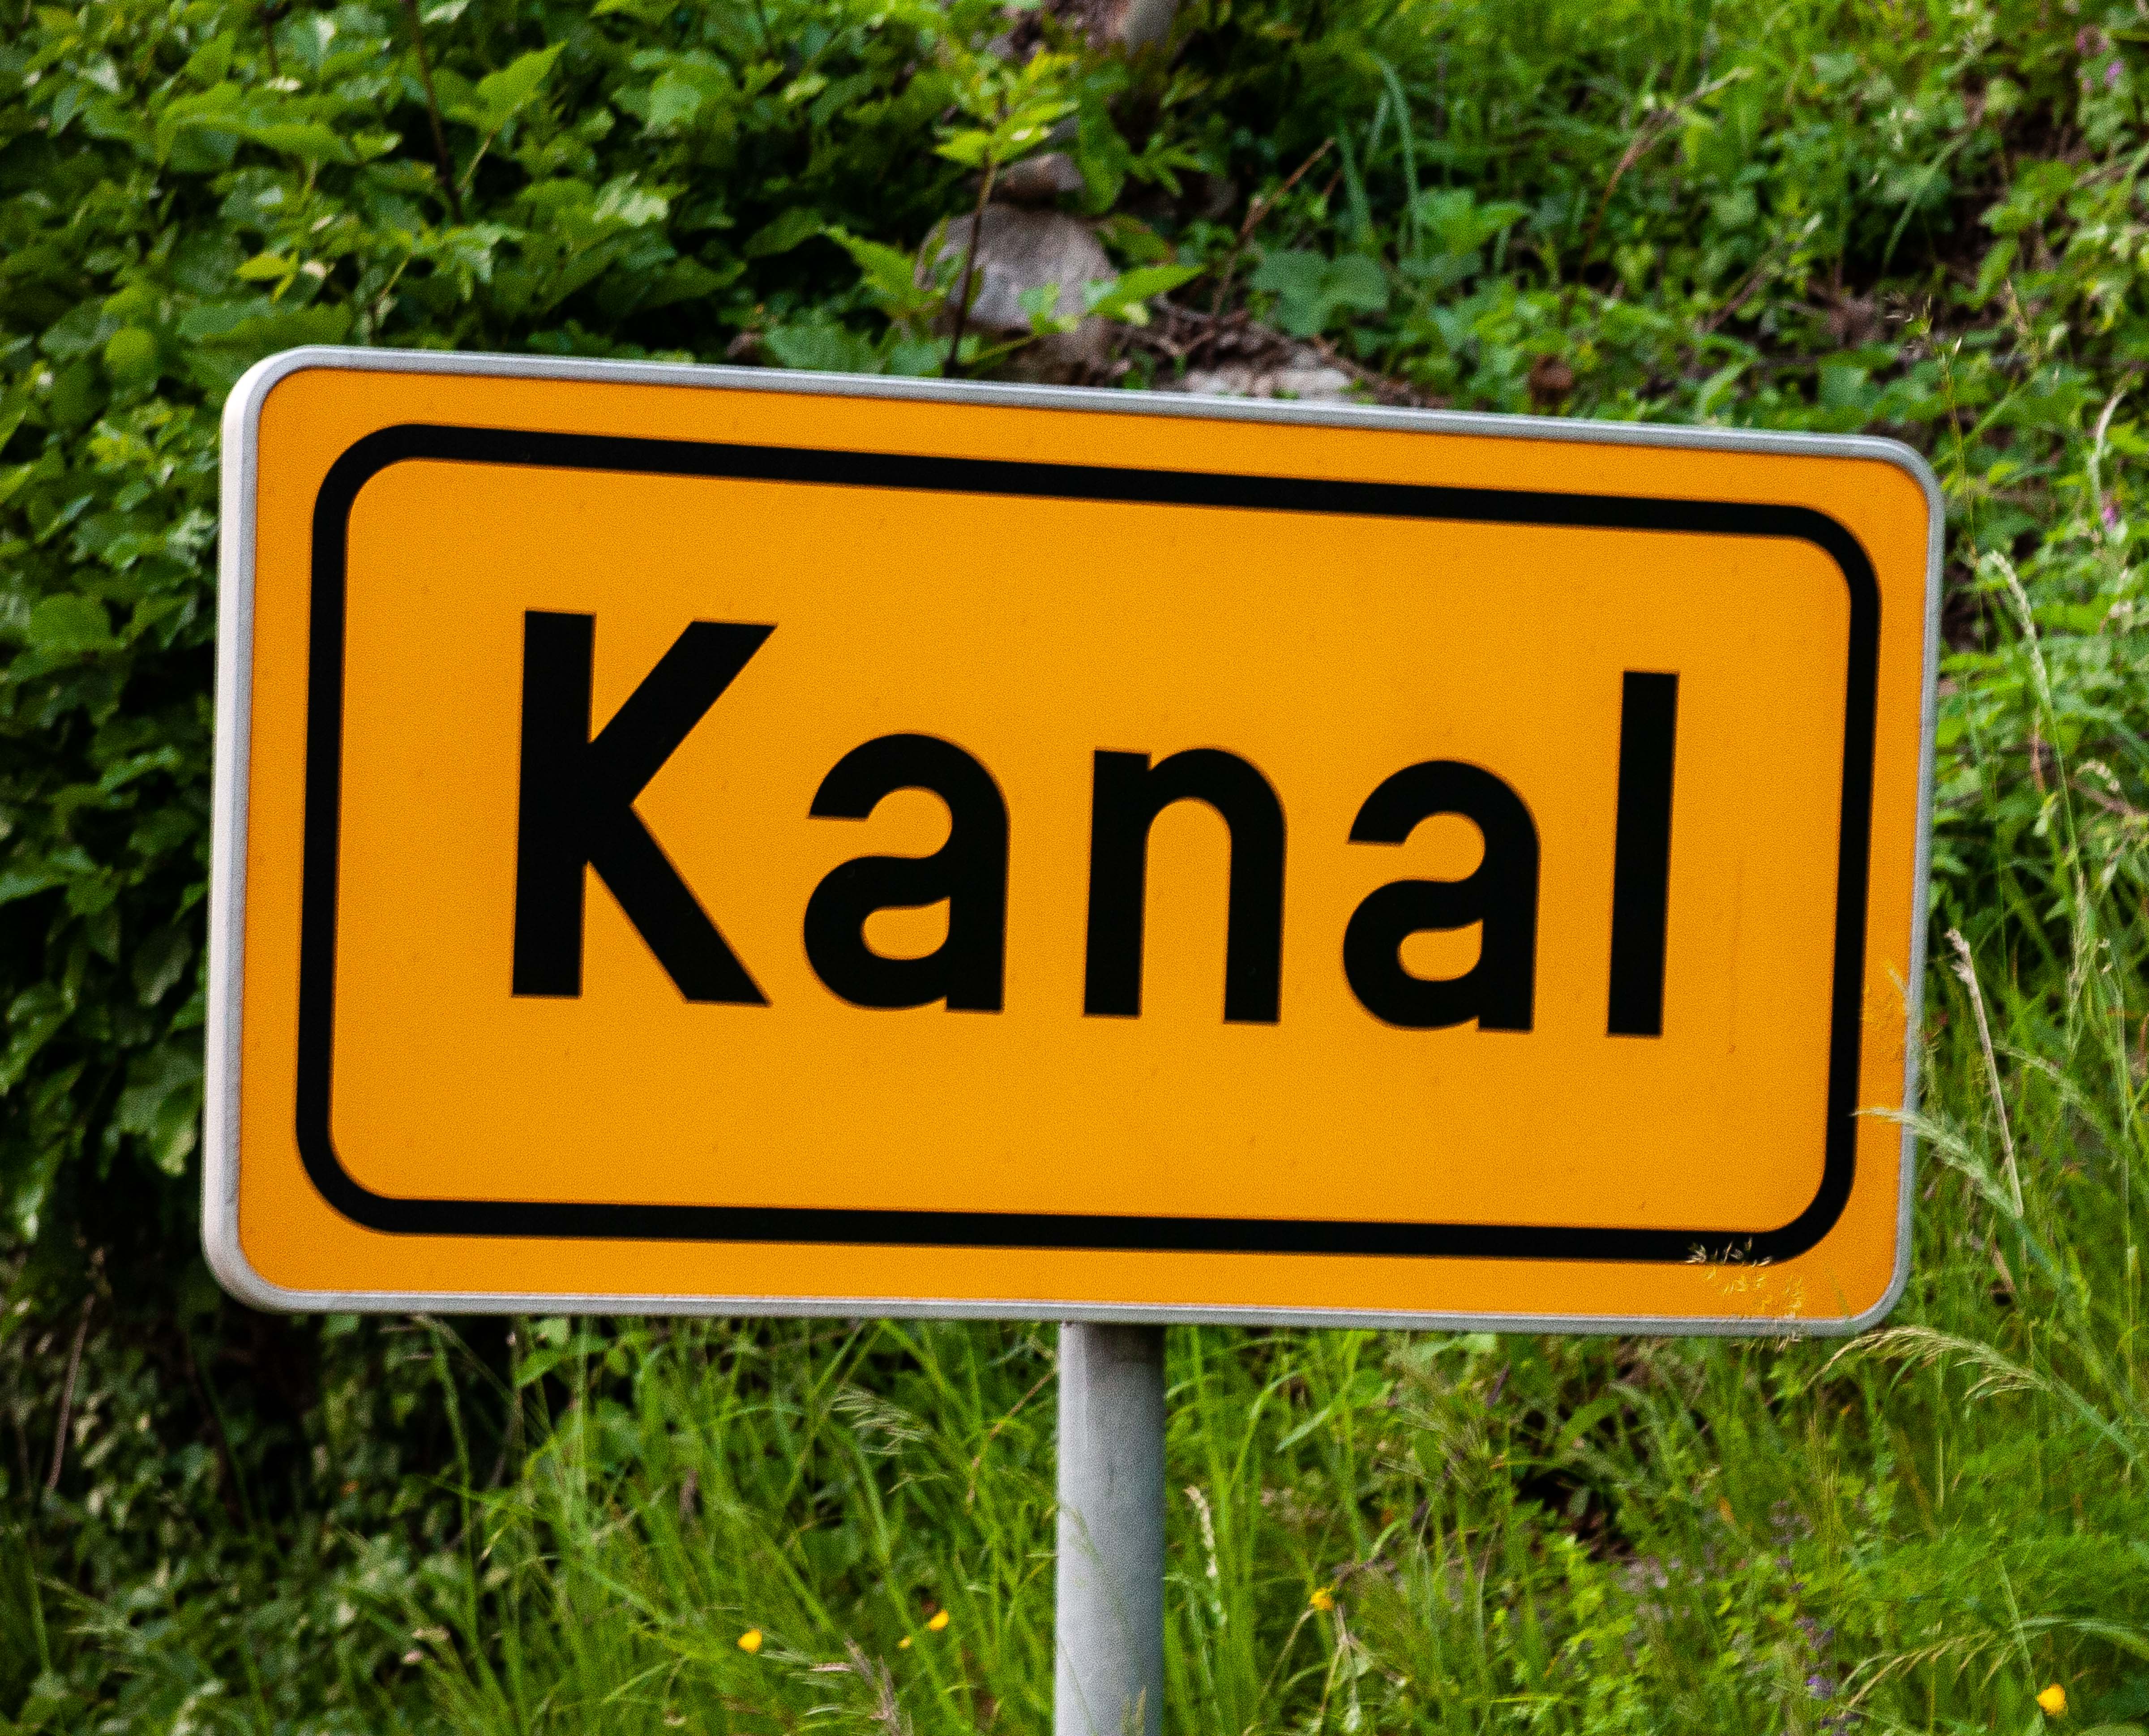 Slovenia, Kanal Prov, Kanal Sign, 2006, IMG 6850